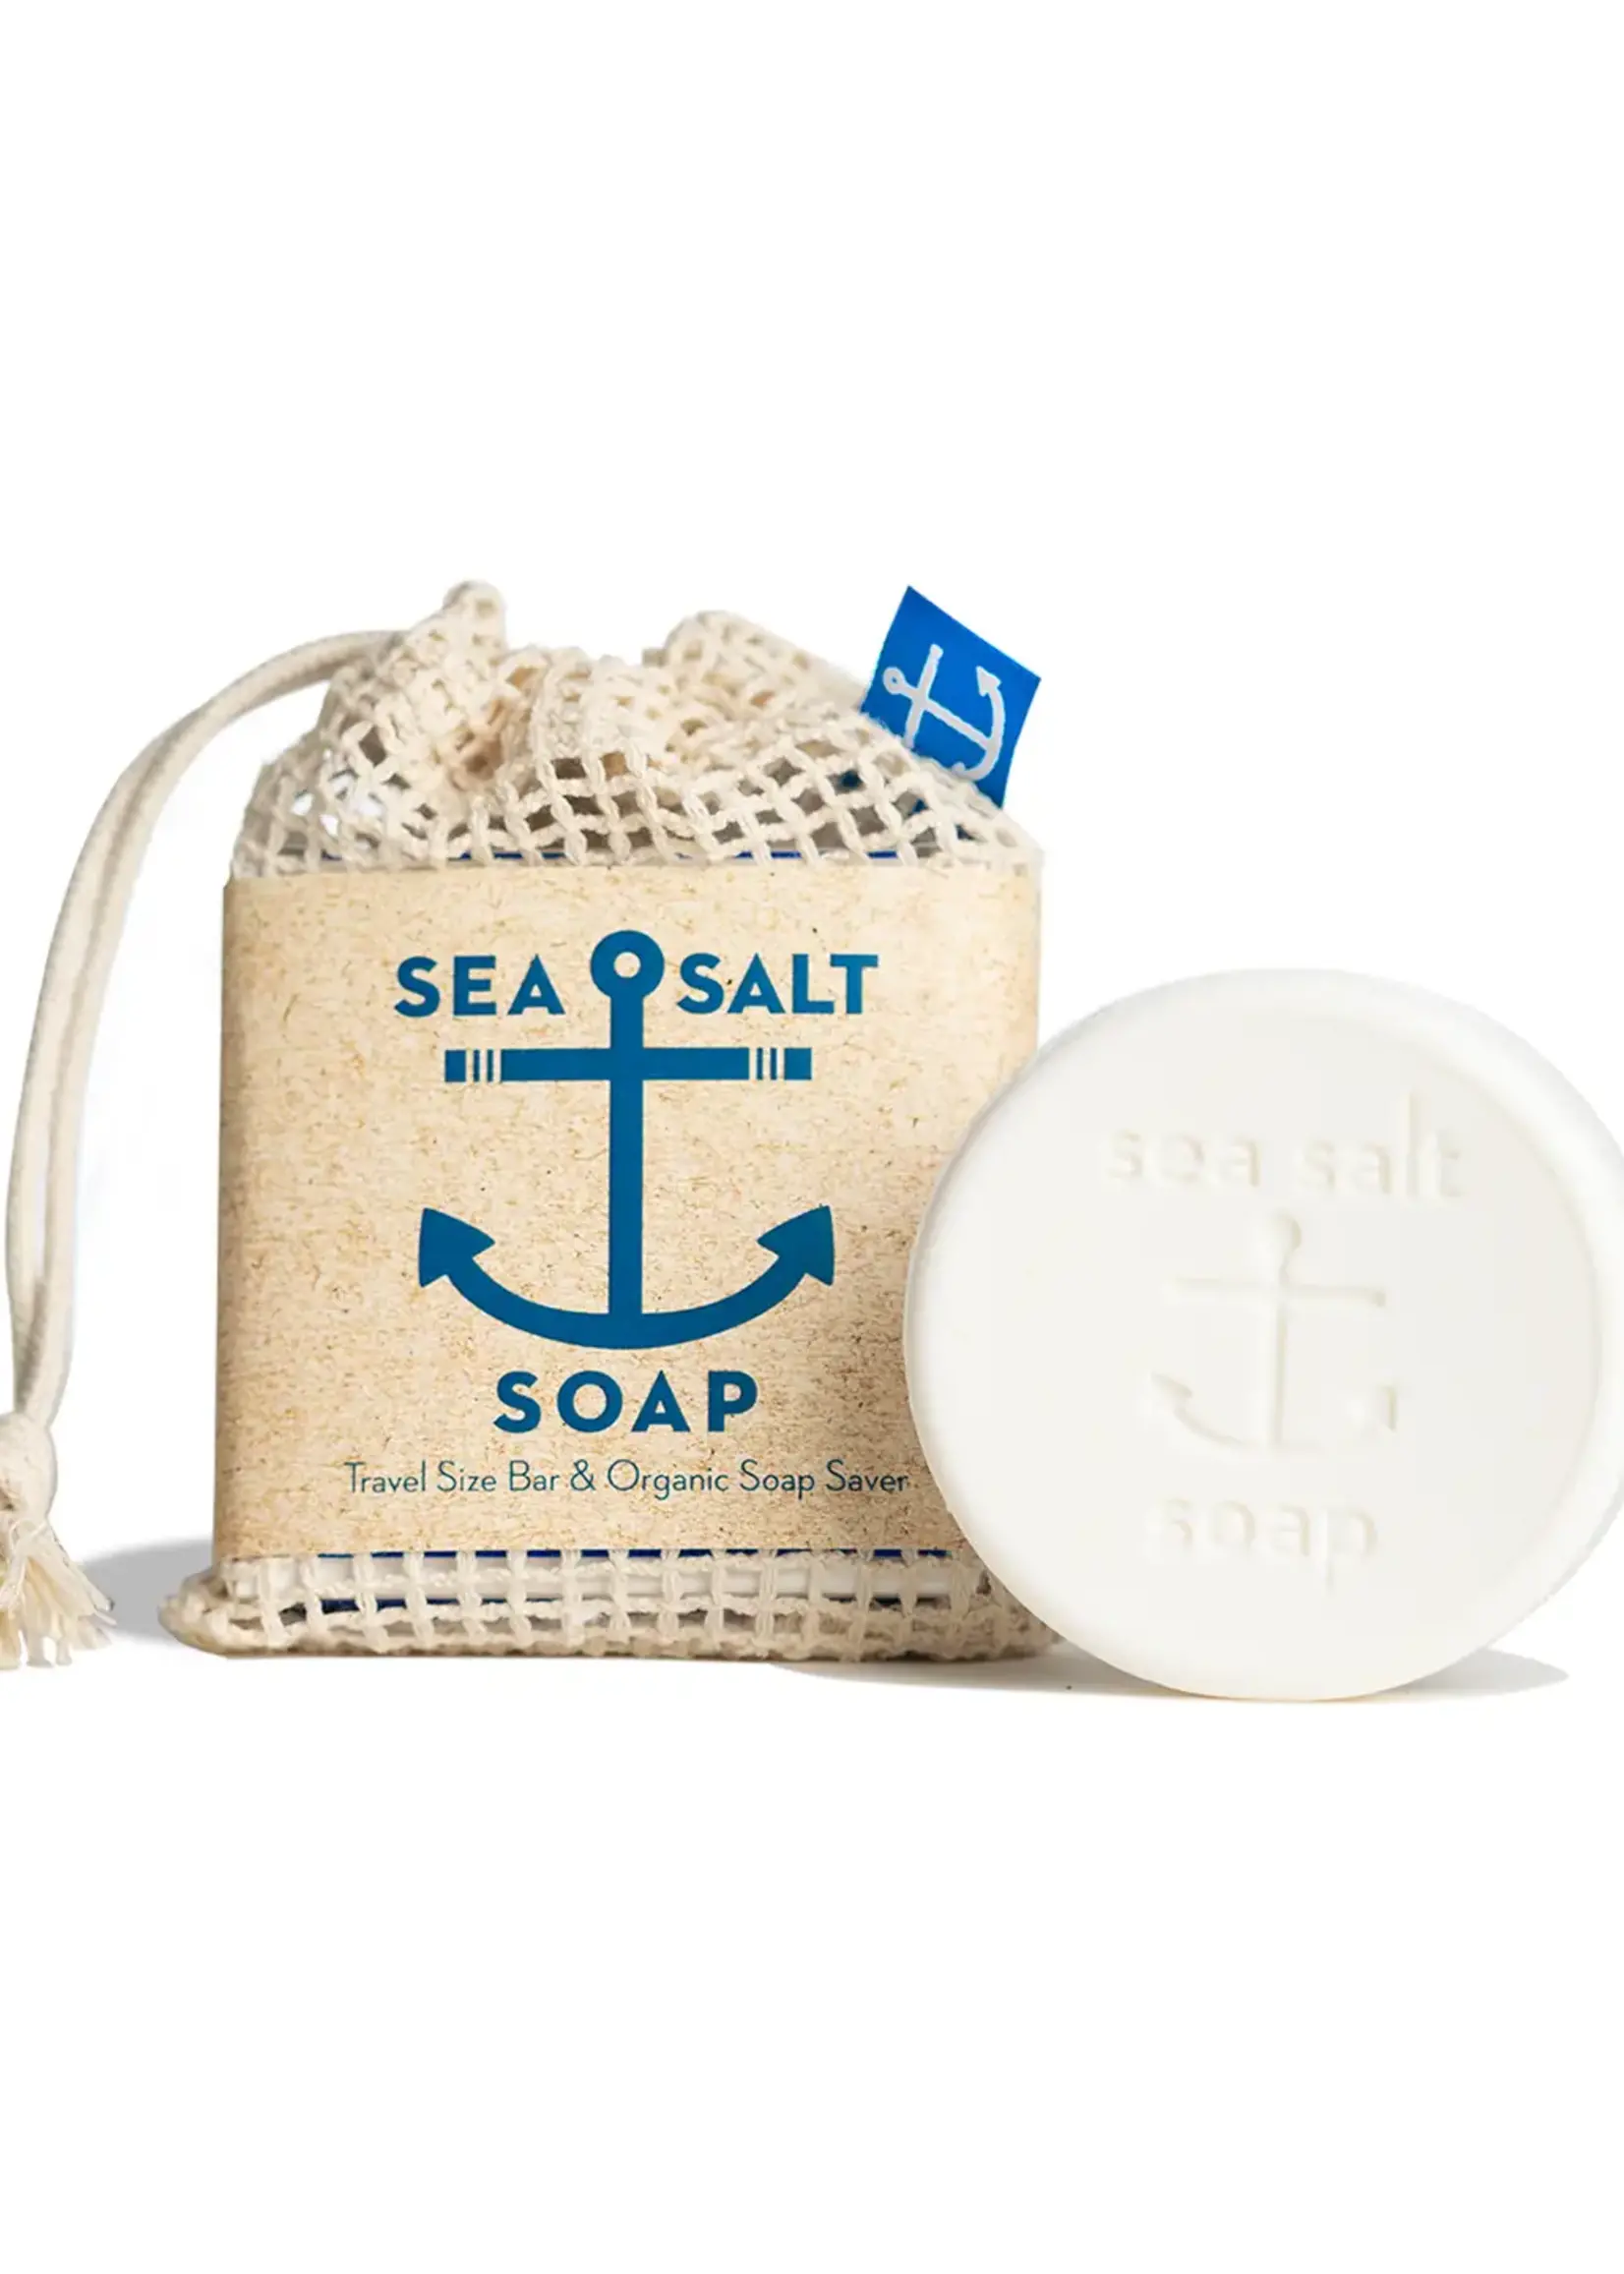 Kalastyle Swedish Dream Travel Size Sea Salt Soap Bar and Soap Saver